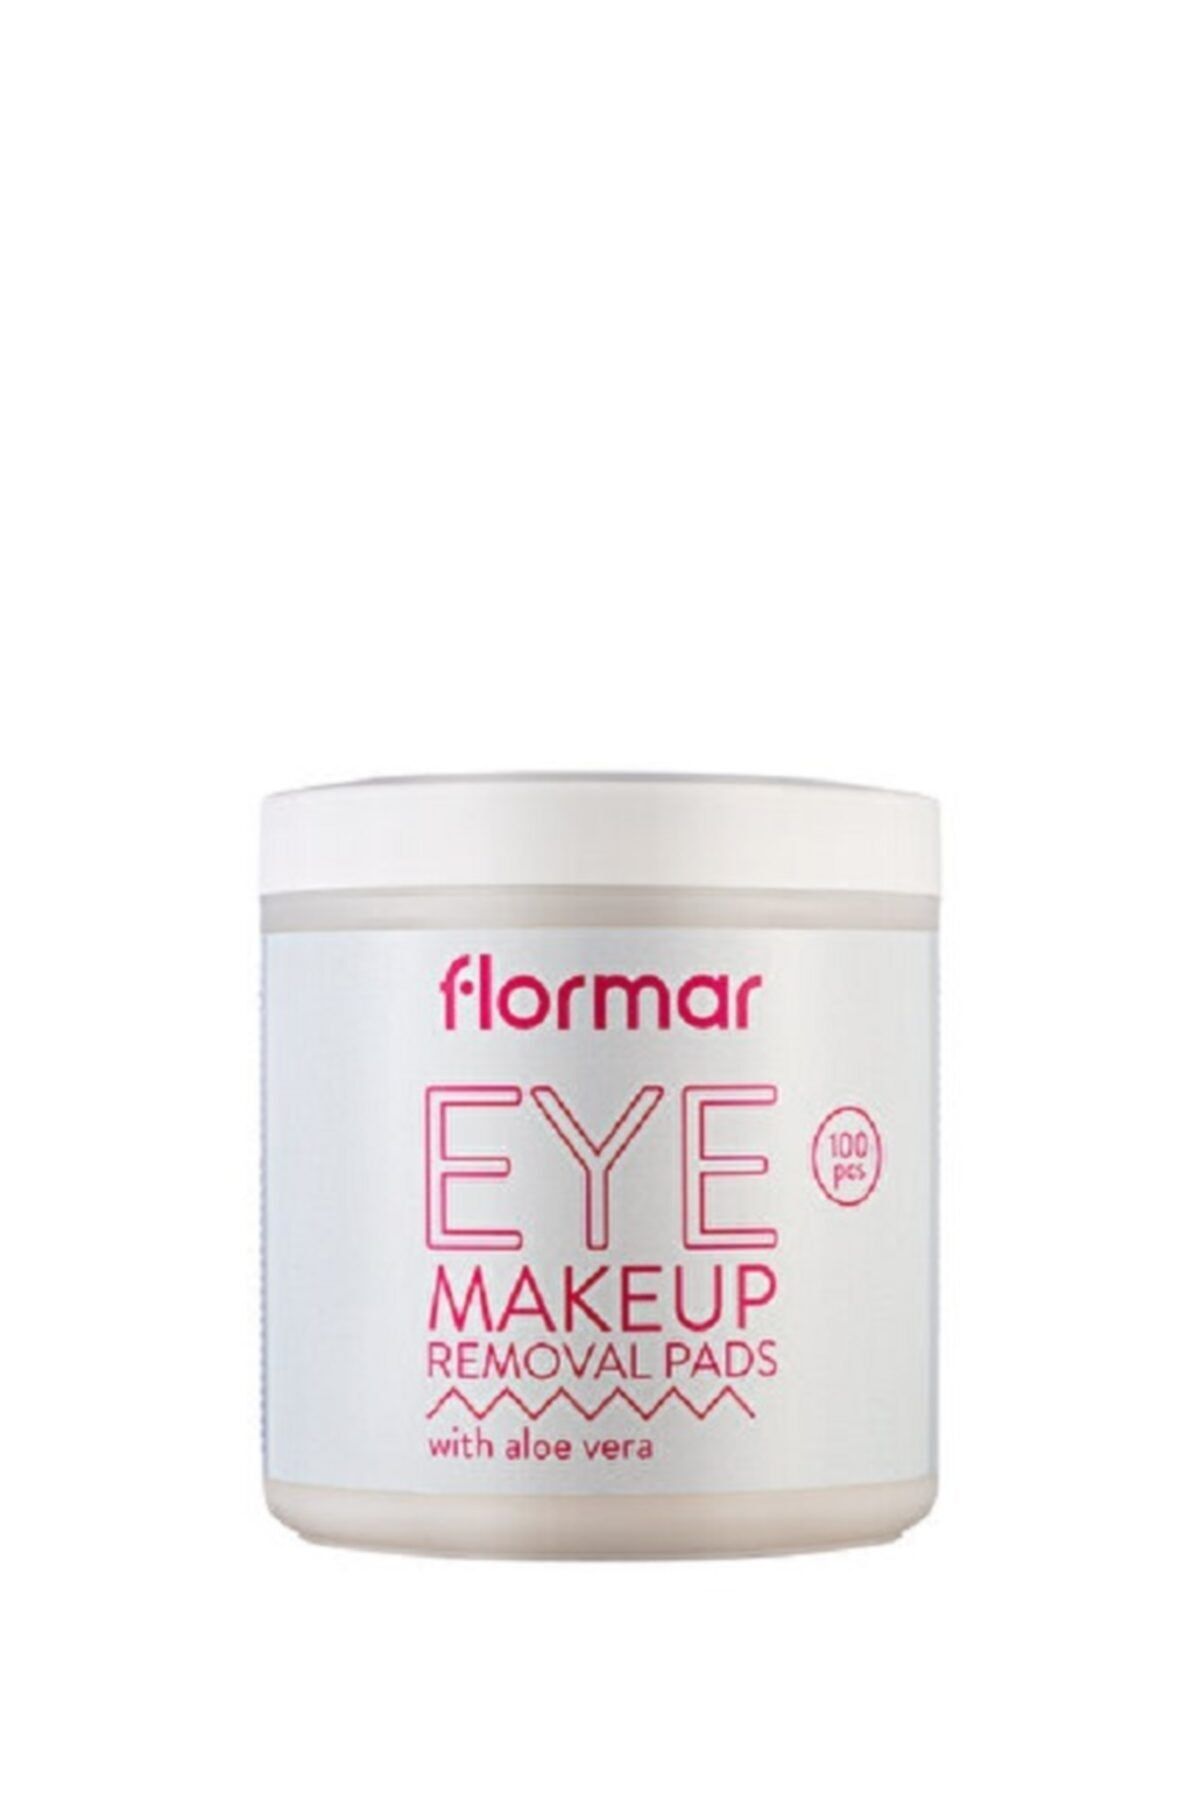 Flormar Eye Makeup Removal Pads Göz Makyajı Temizleme Pedleri 100 Pcs